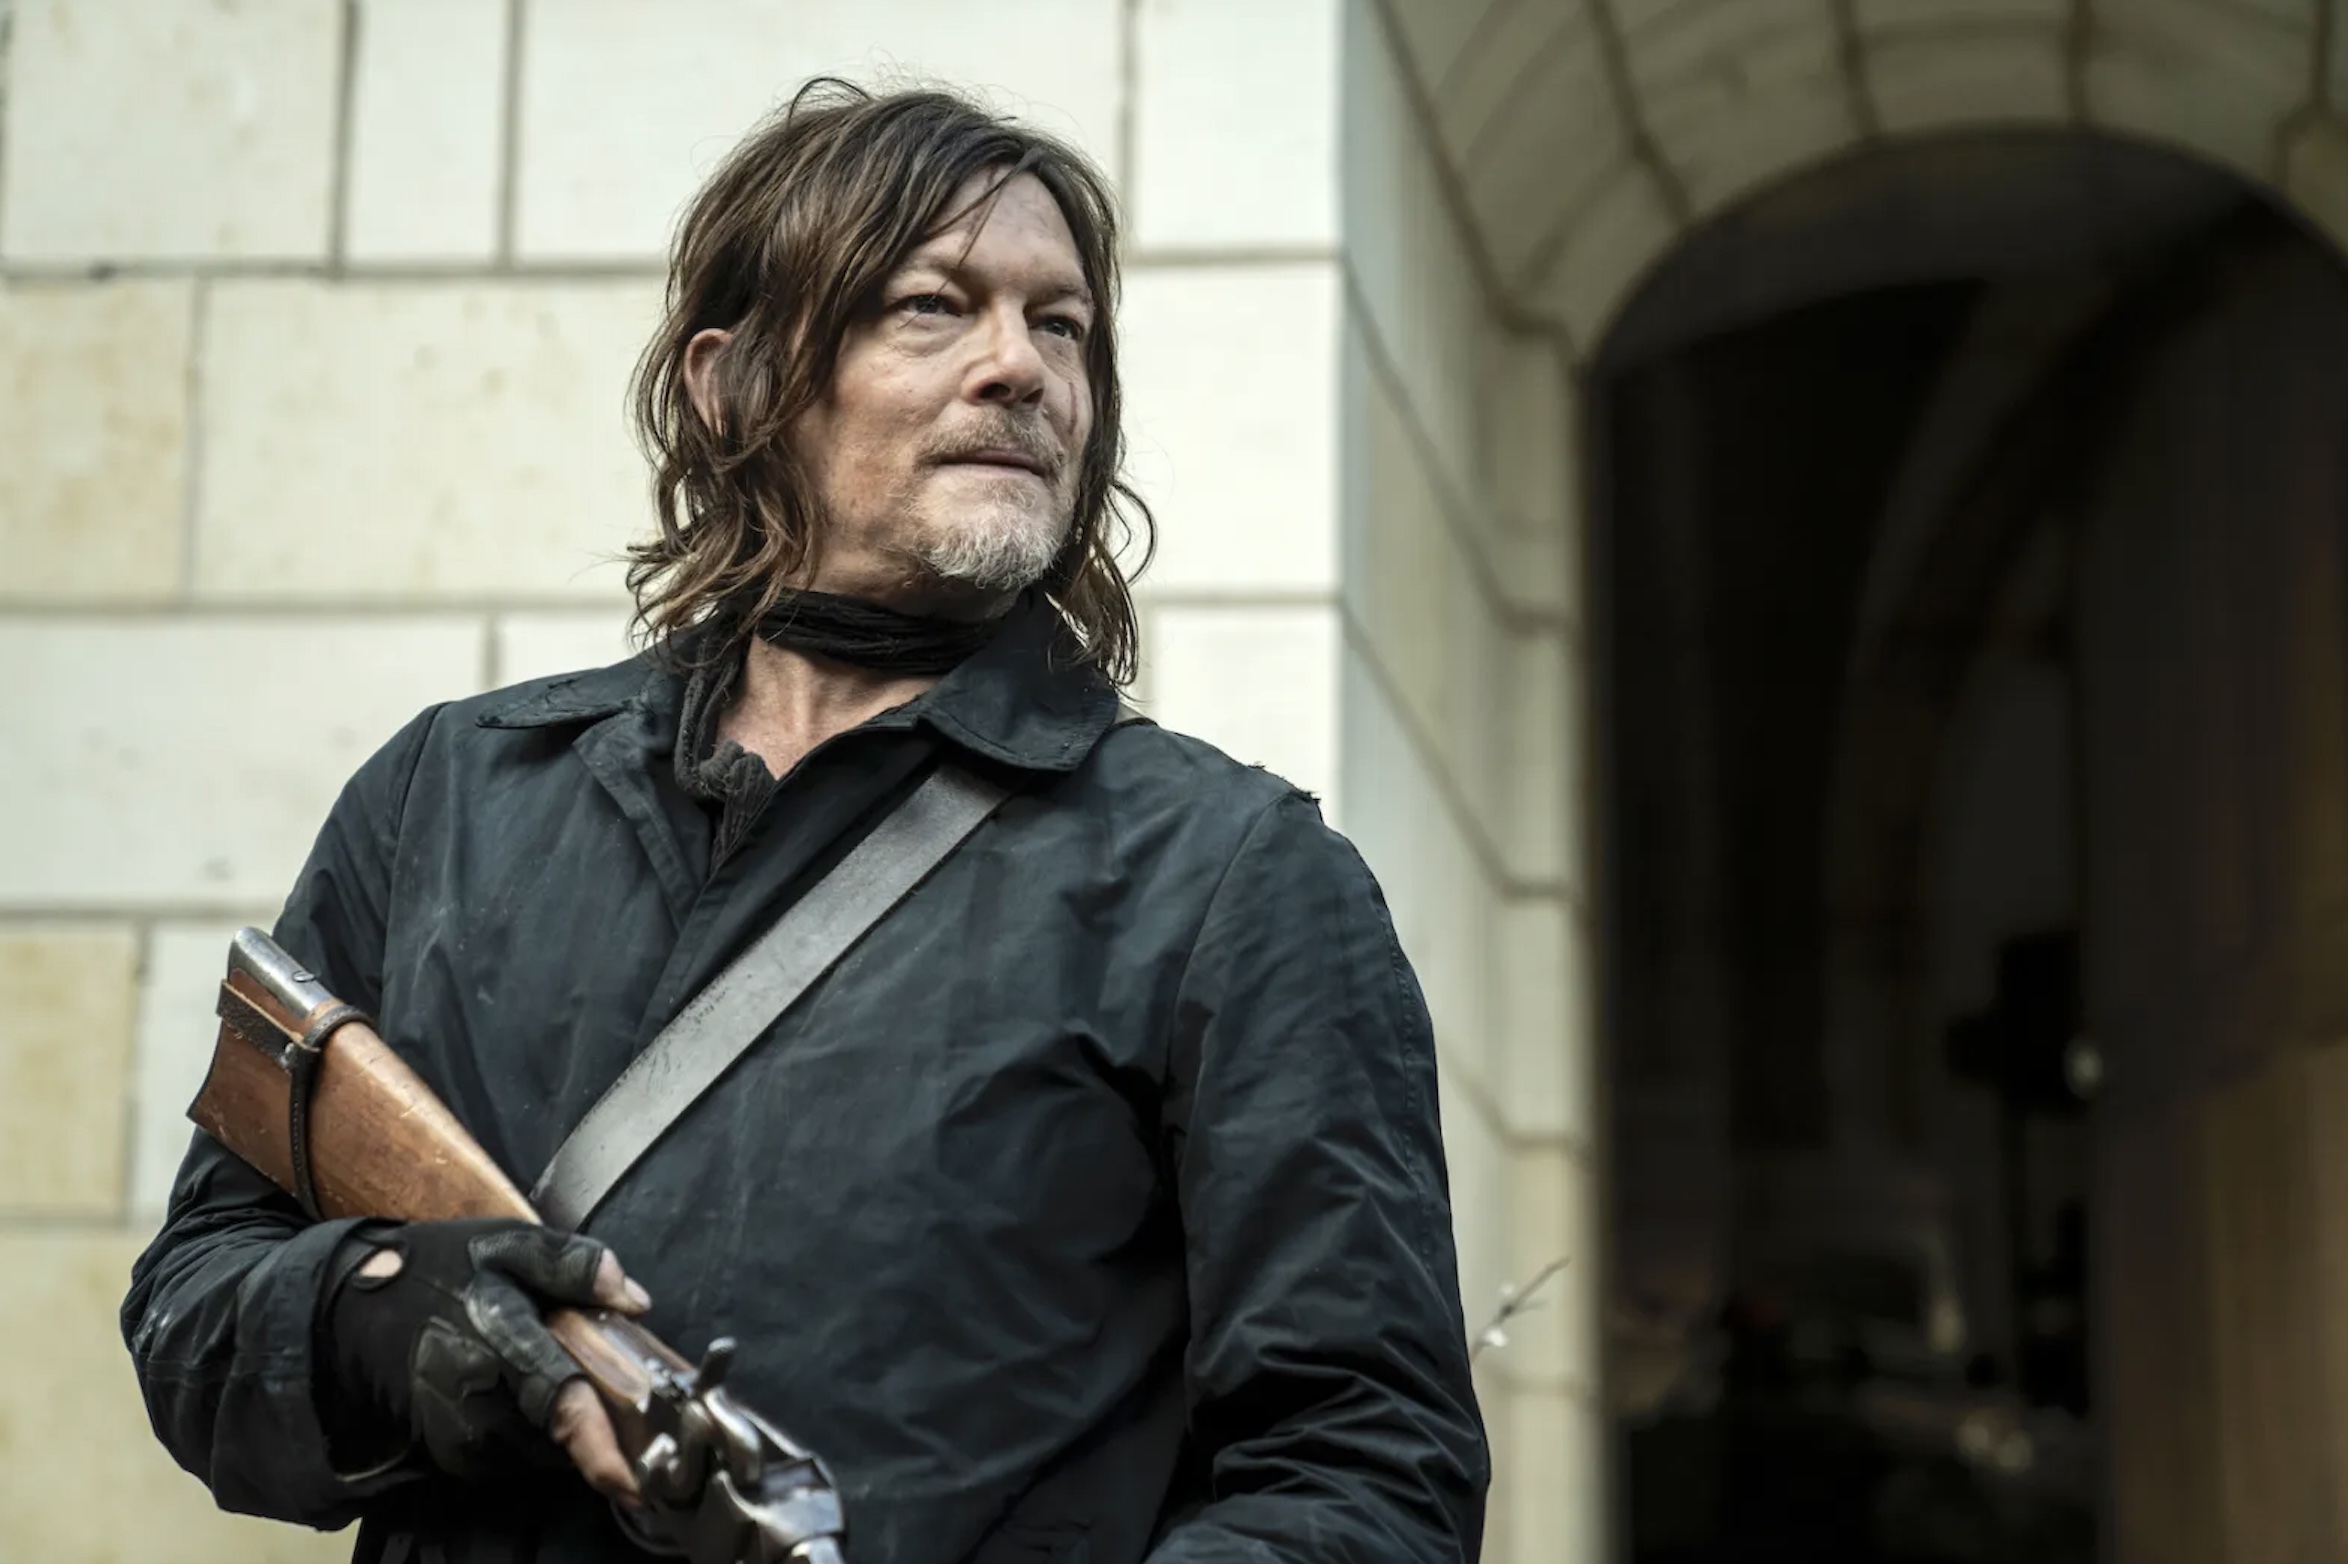 The Walking Dead: Daryl Dixon Cast on AMC - Norman Reedus as Daryl Dixon